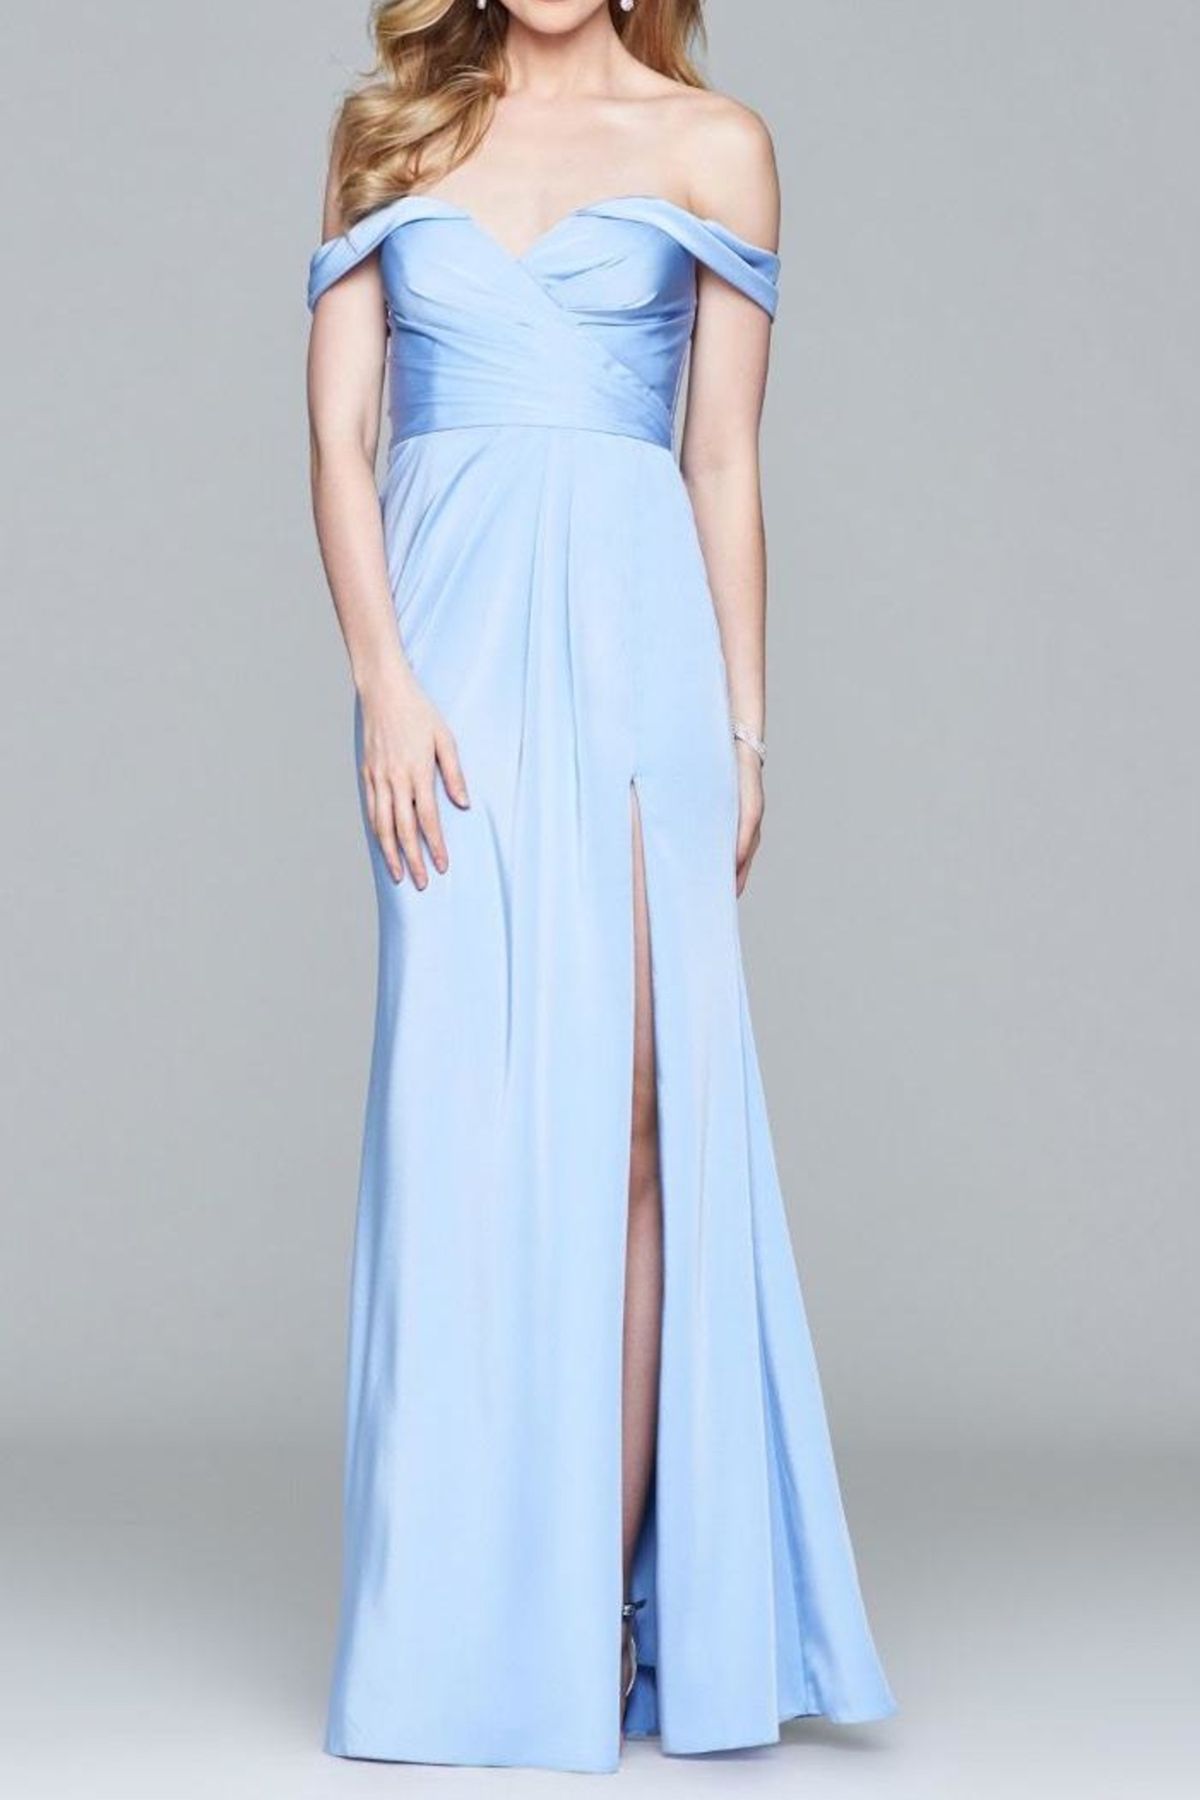 Style 8083 Faviana Size 2 Off The Shoulder Light Blue Side Slit Dress on Queenly